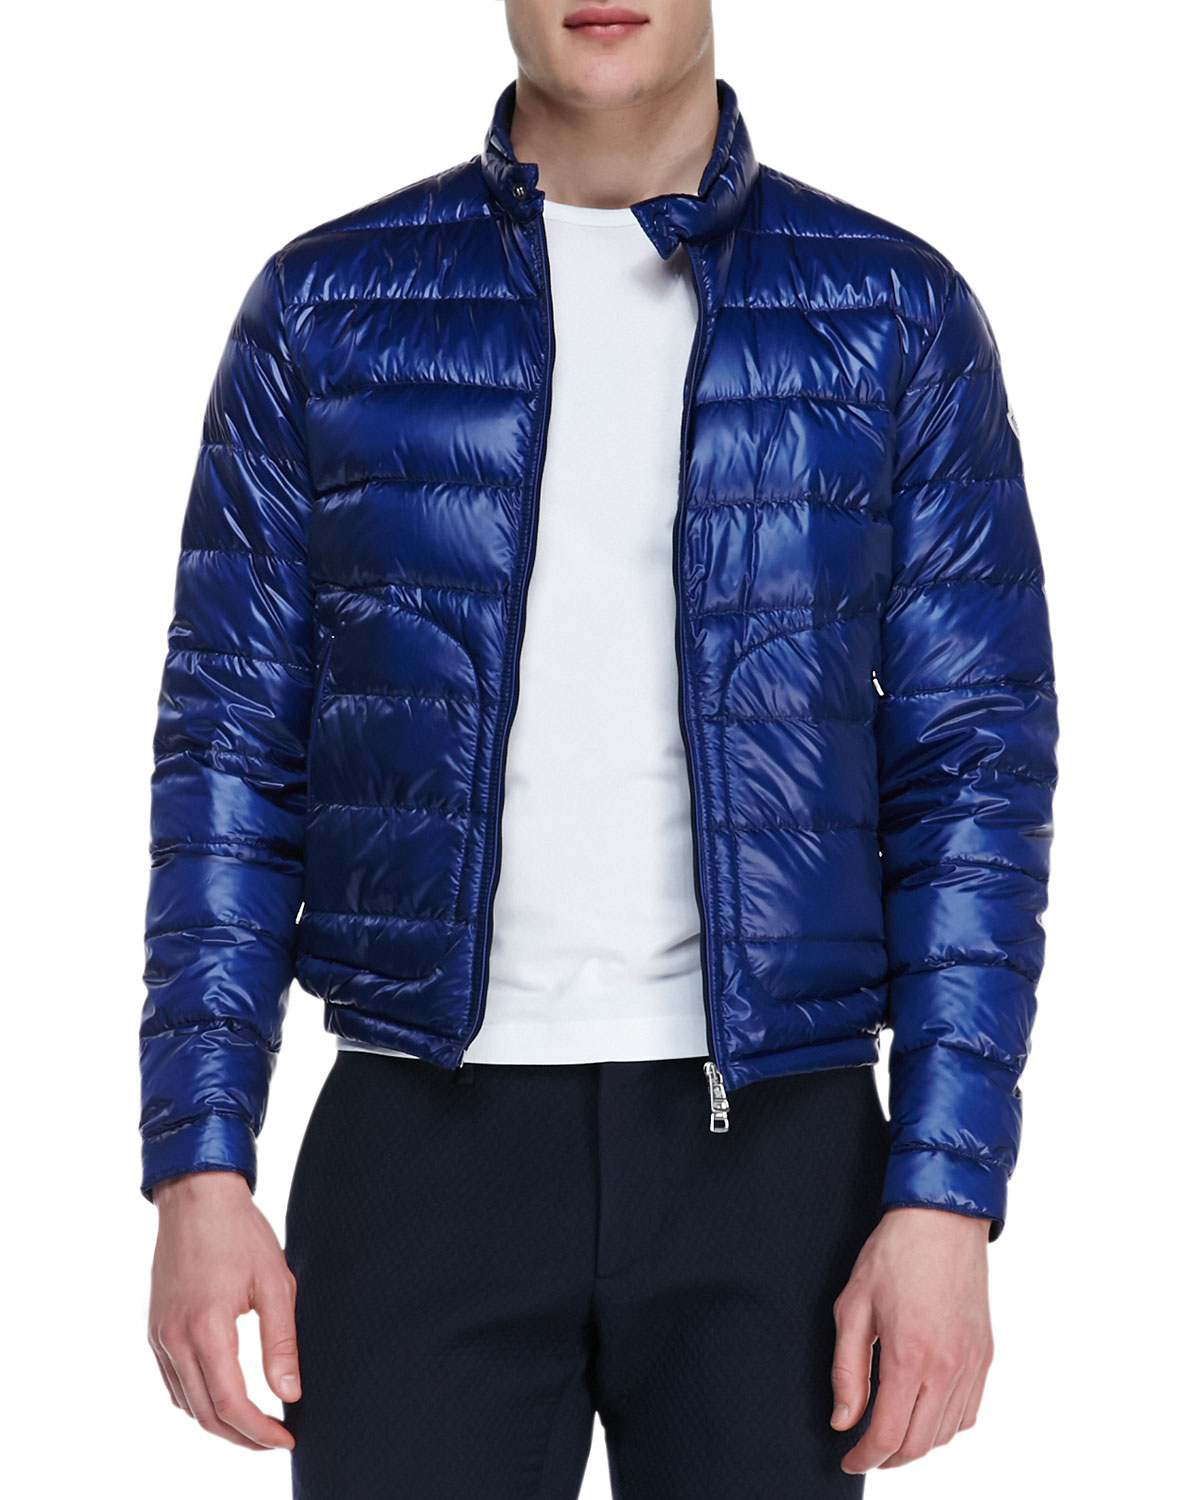 Lyst - Moncler Acorus Lightweight Puffer Jacket Blue in Blue for Men